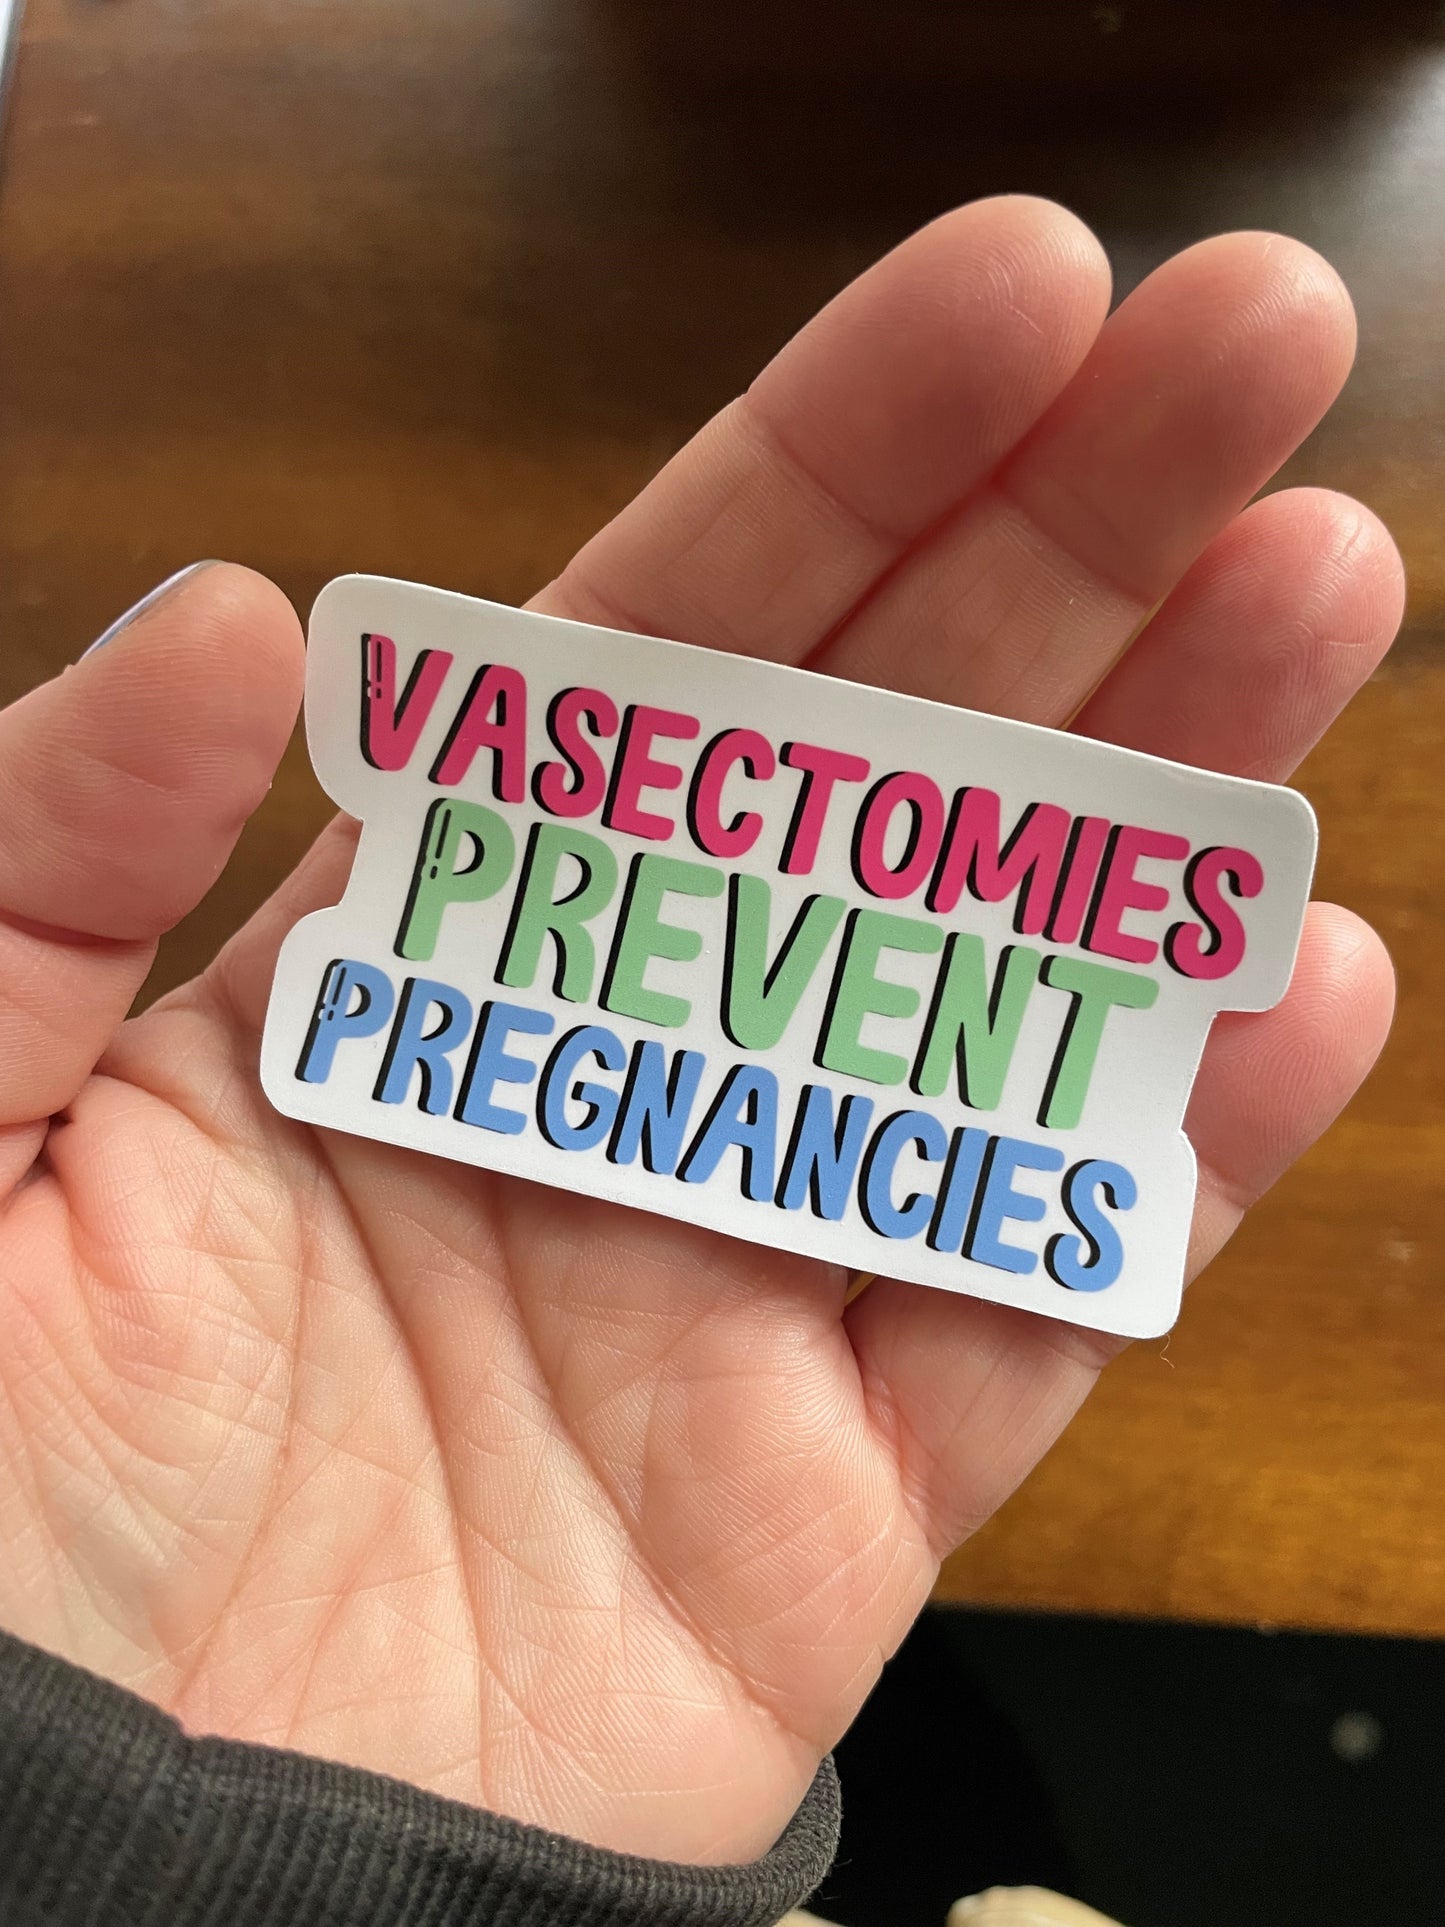 Vasectomies Prevent Pregnancies Vinyl Sticker